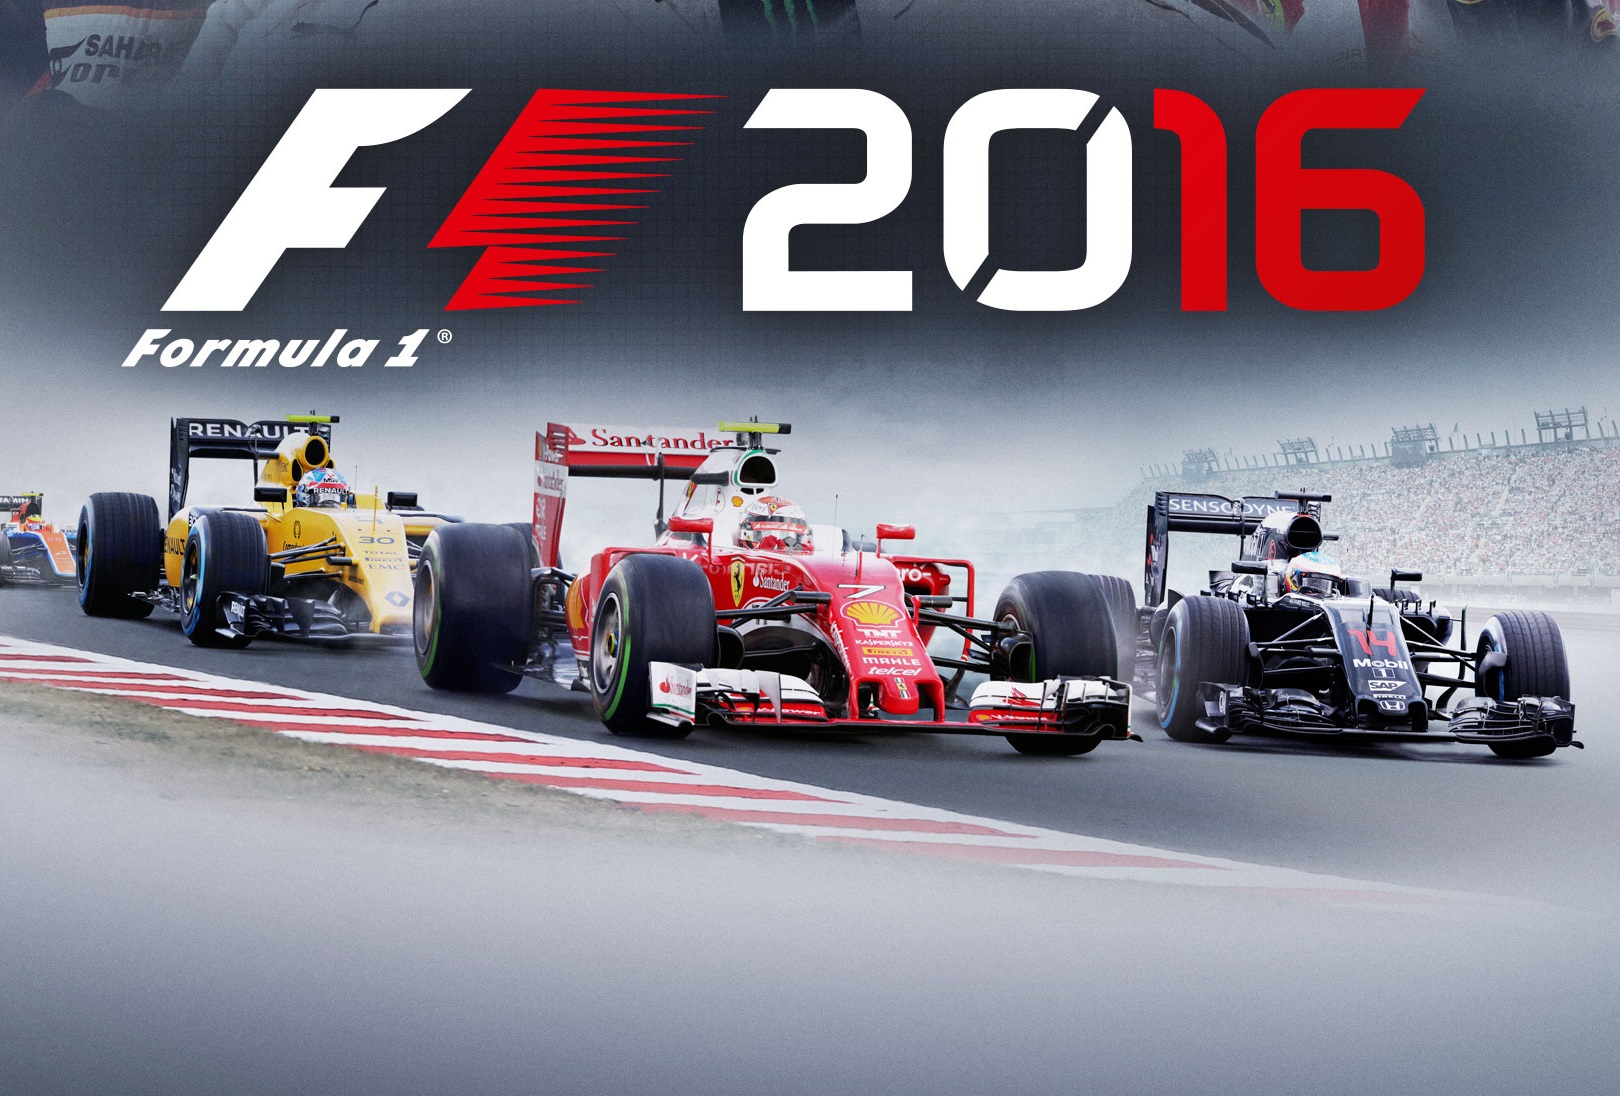 24 1 2016. Формула 1 2016. F1 2016. F1 2016 игра. Формула 1 2014.